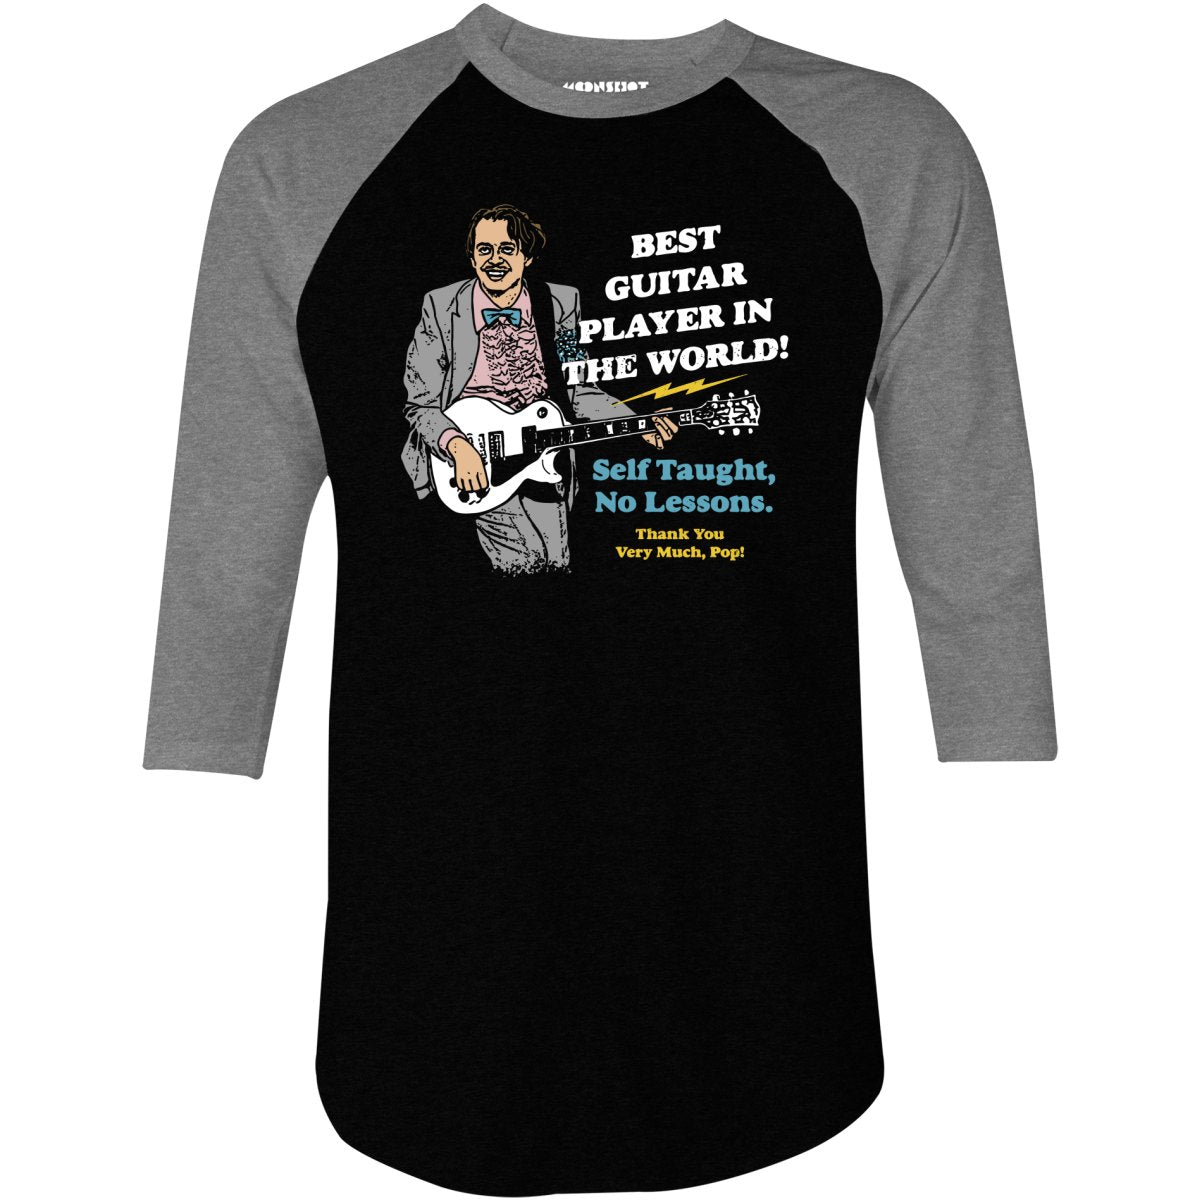 Best Guitar Player in The World! - 3/4 Sleeve Raglan T-Shirt